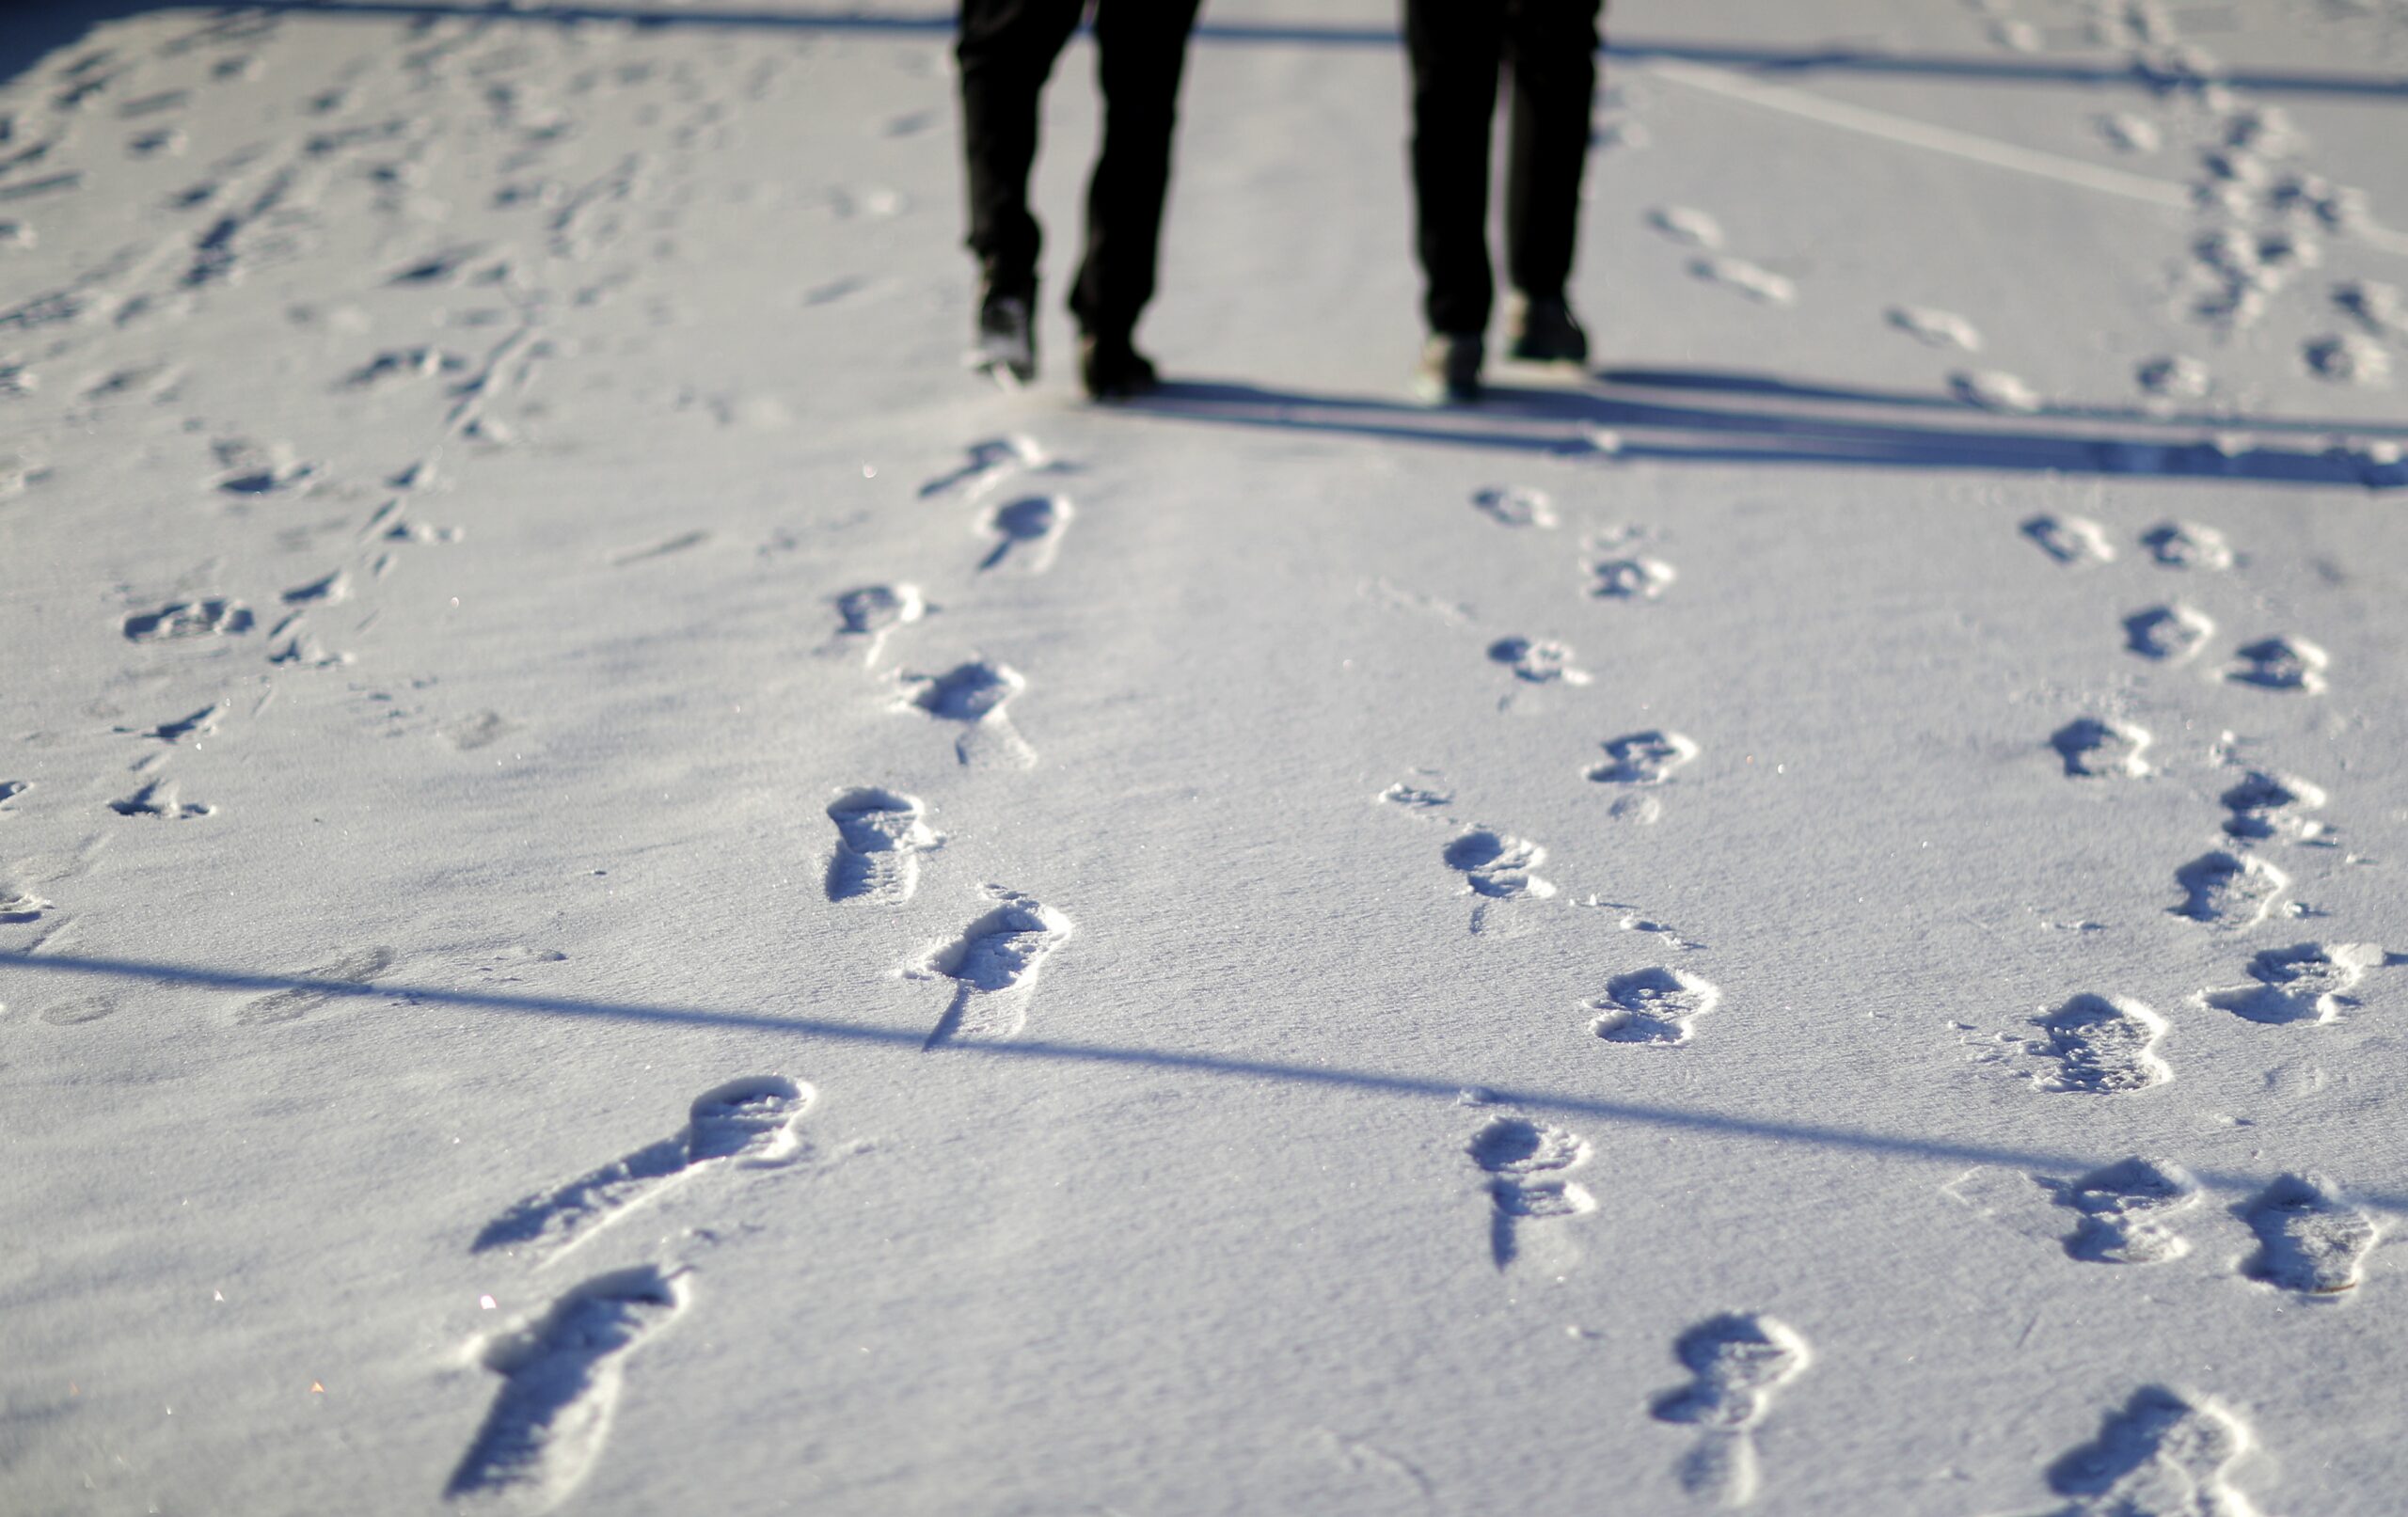 A couple walks through a winter snow covered Piedmont Park